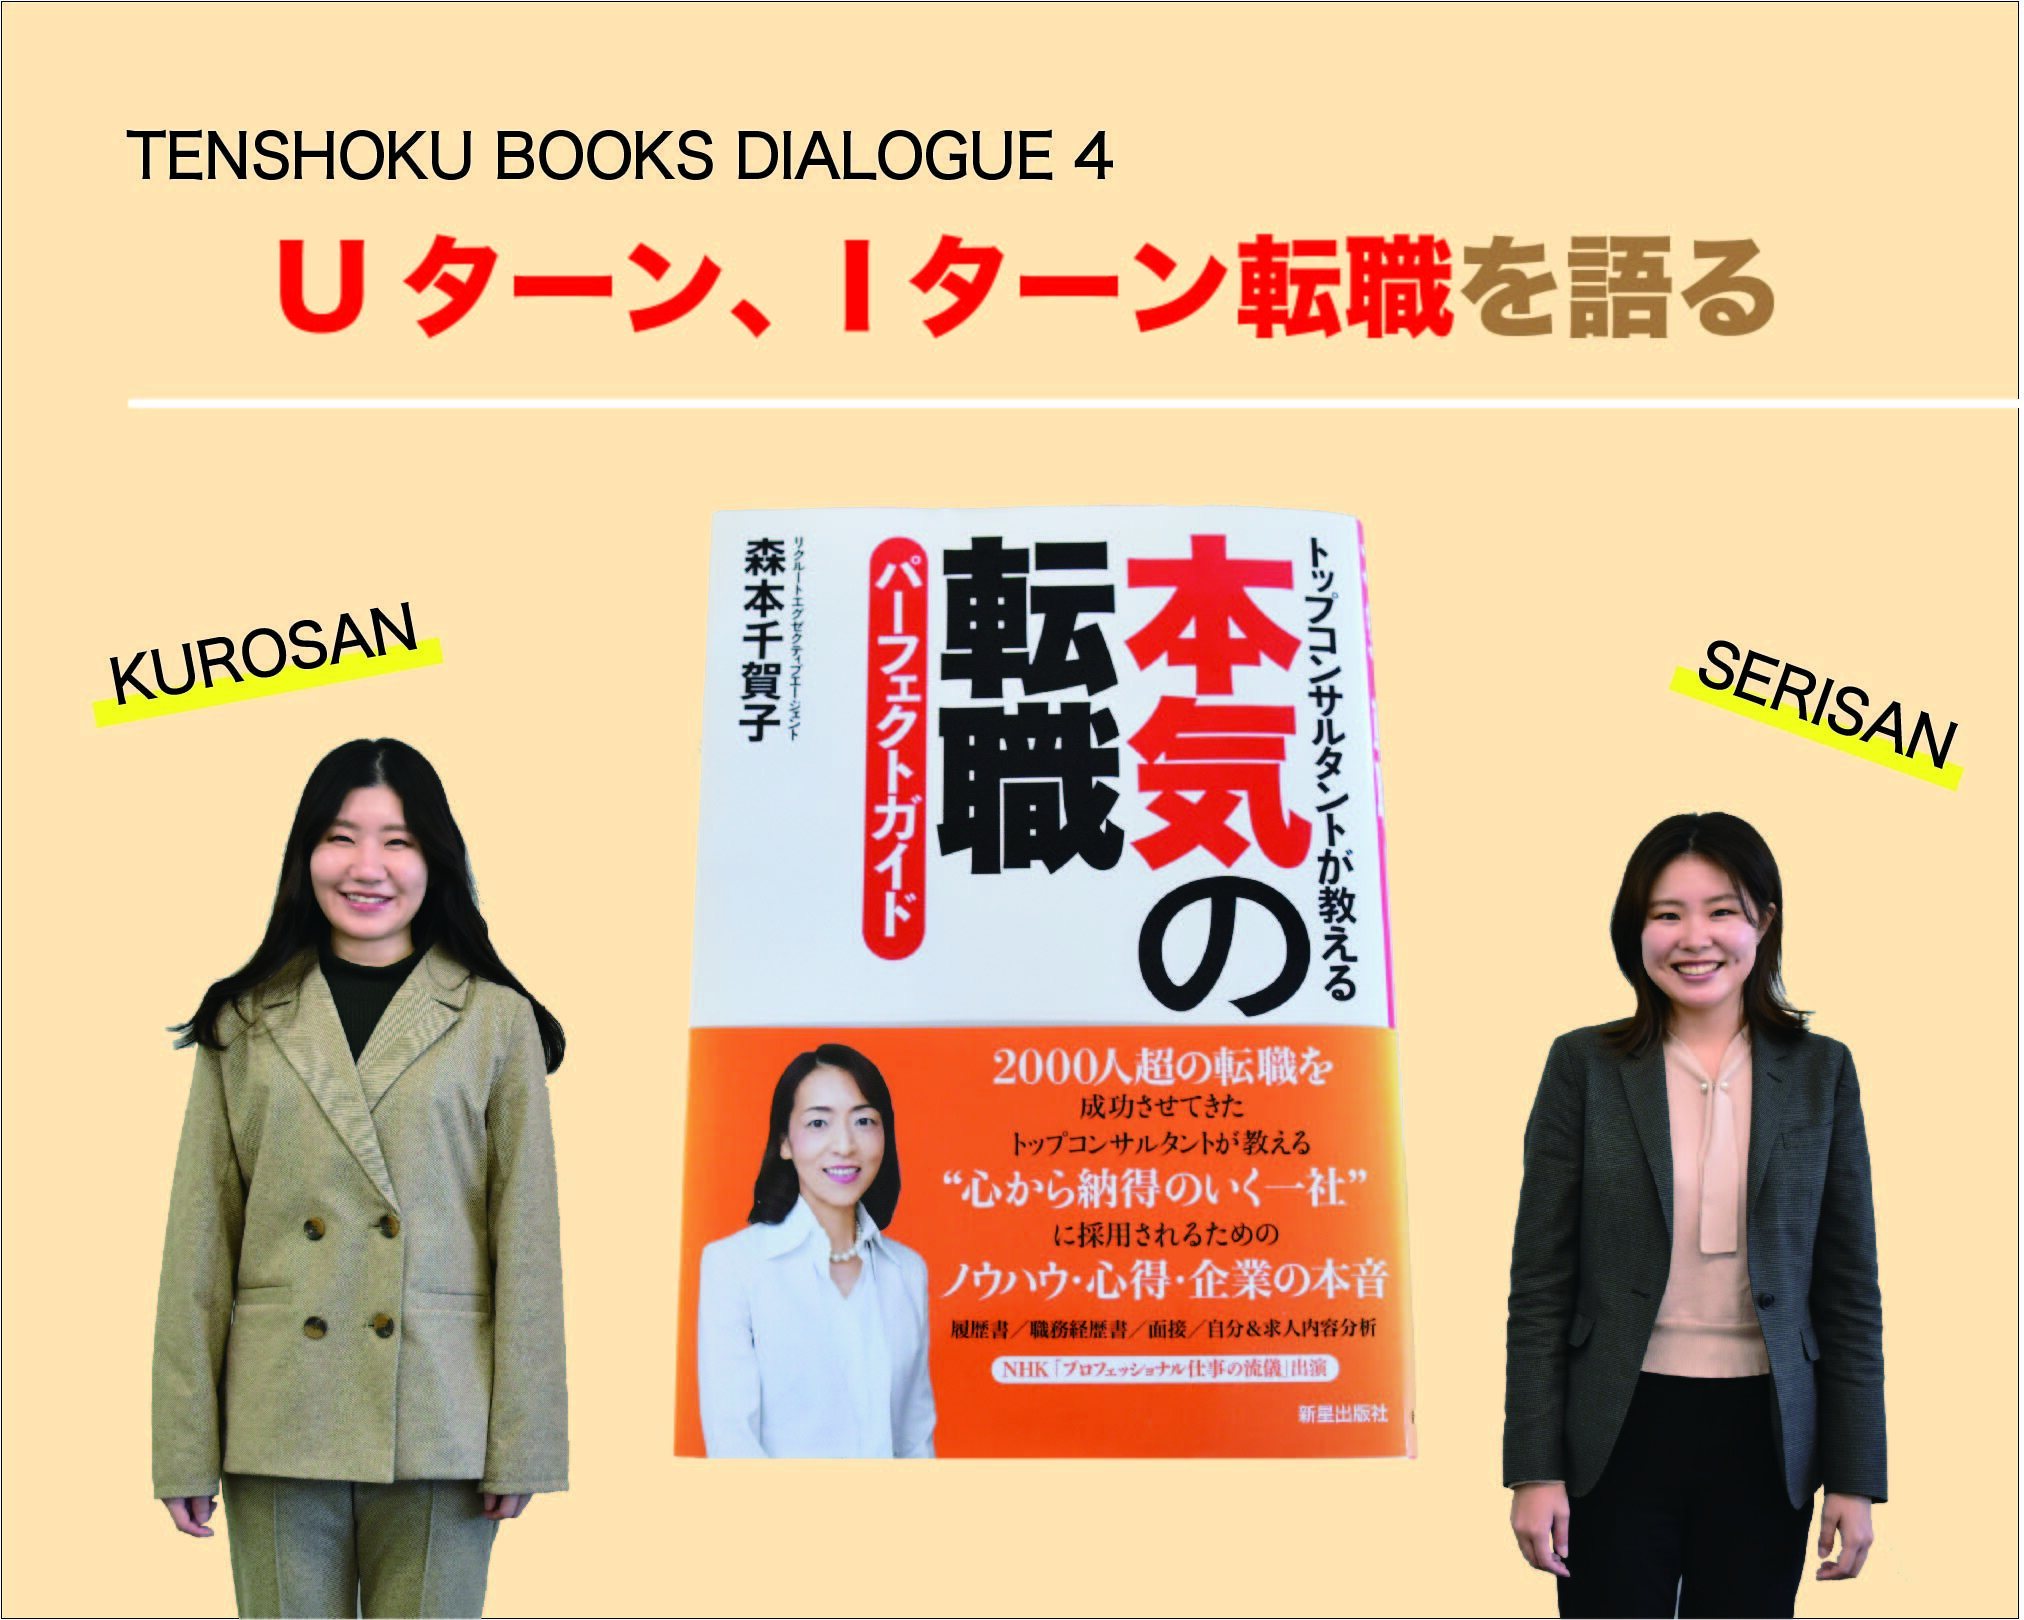 【TENSHOKU BOOKS DIALOGUE4】 『本気の転職パーフェクトガイド』から考える、U・Iターン転職。